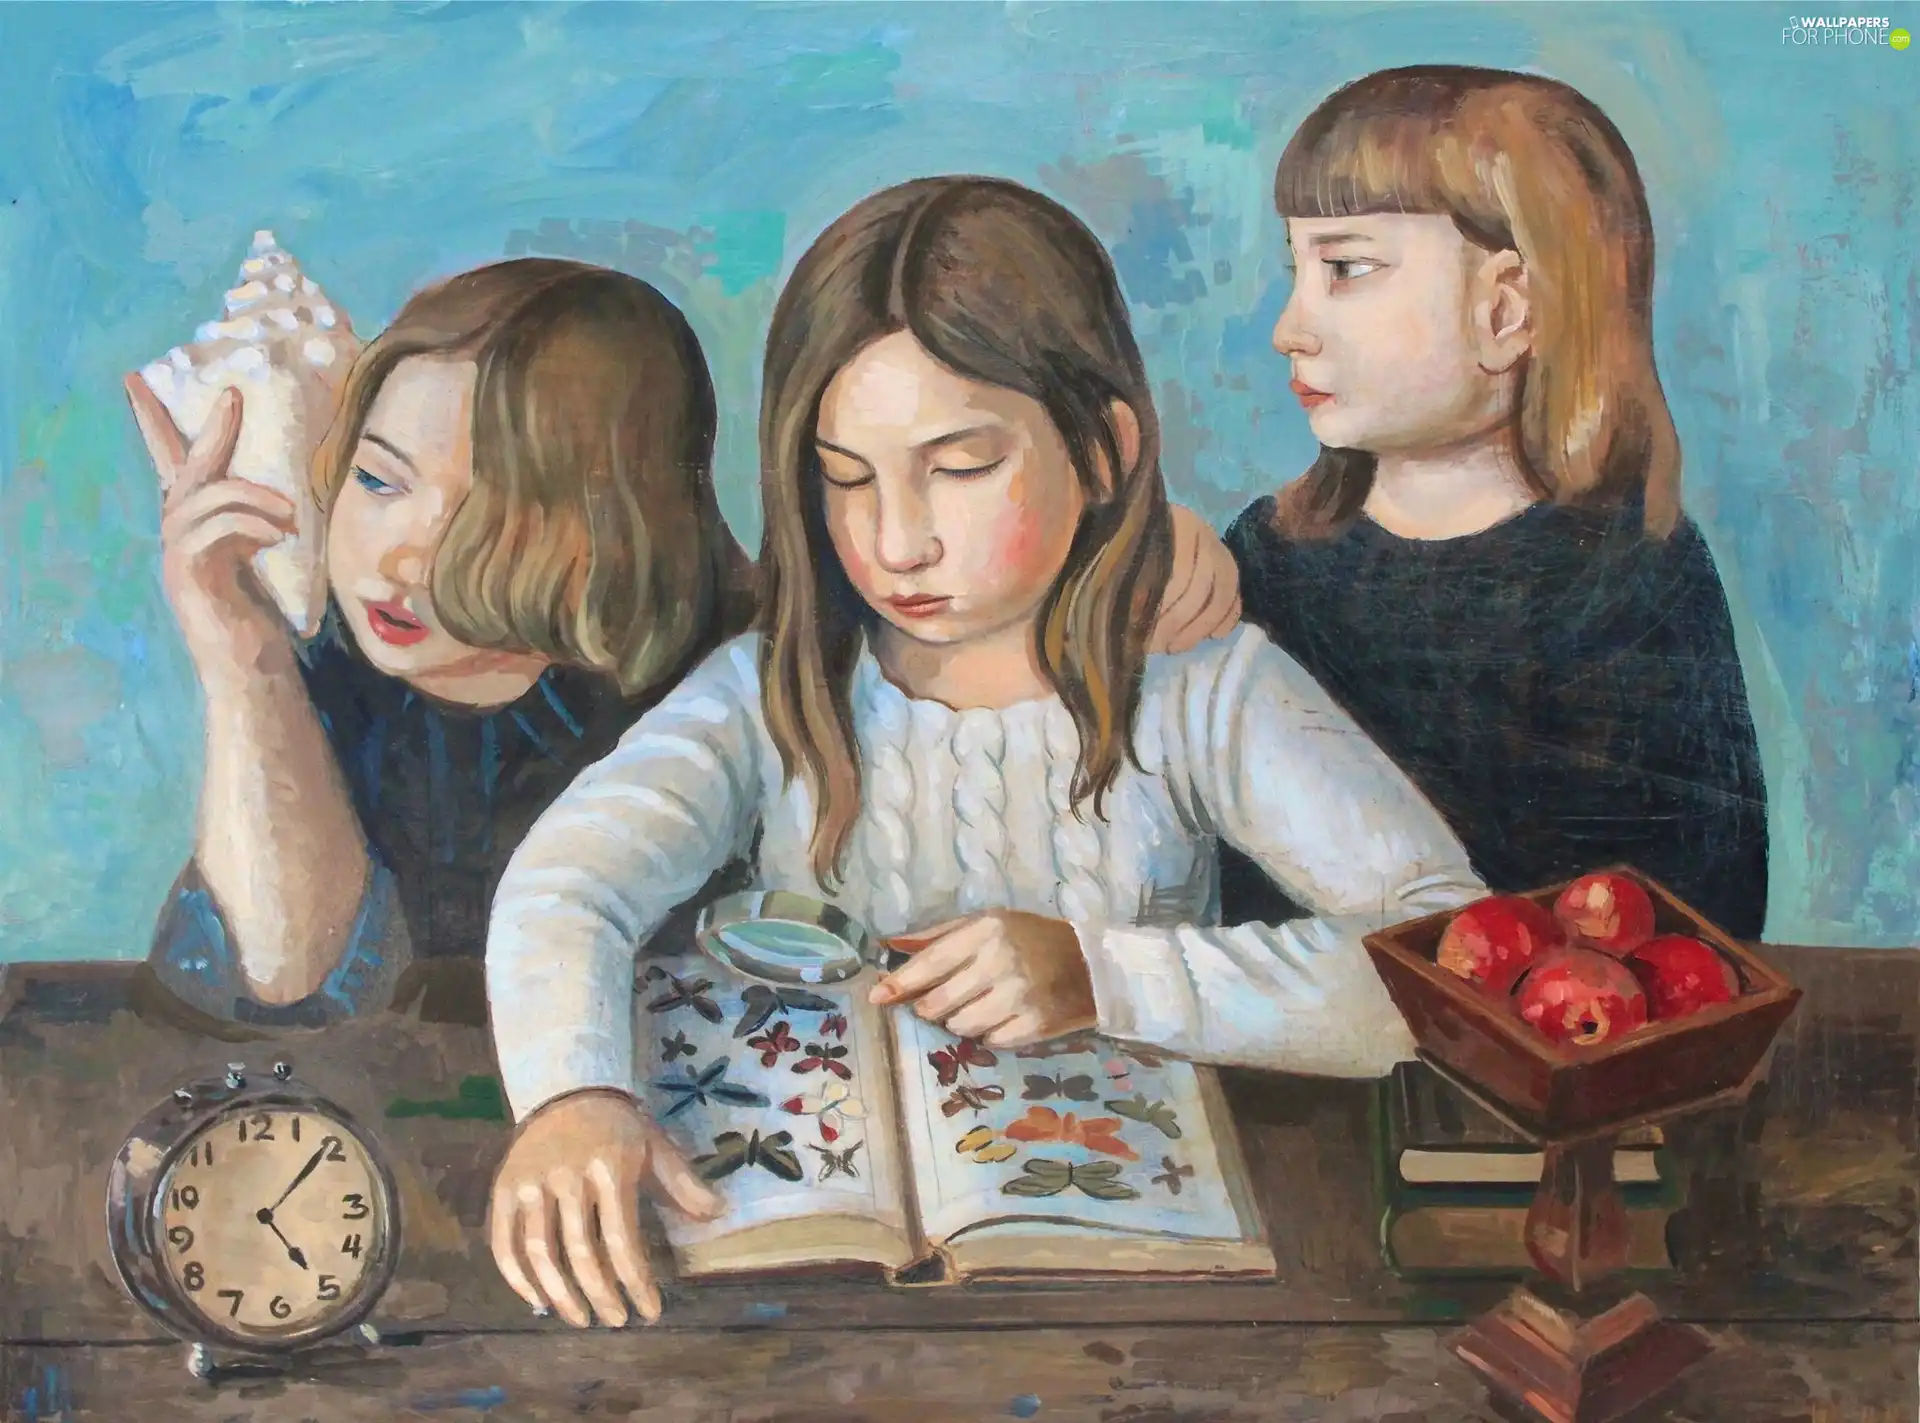 Three, friends, Art Image, girls